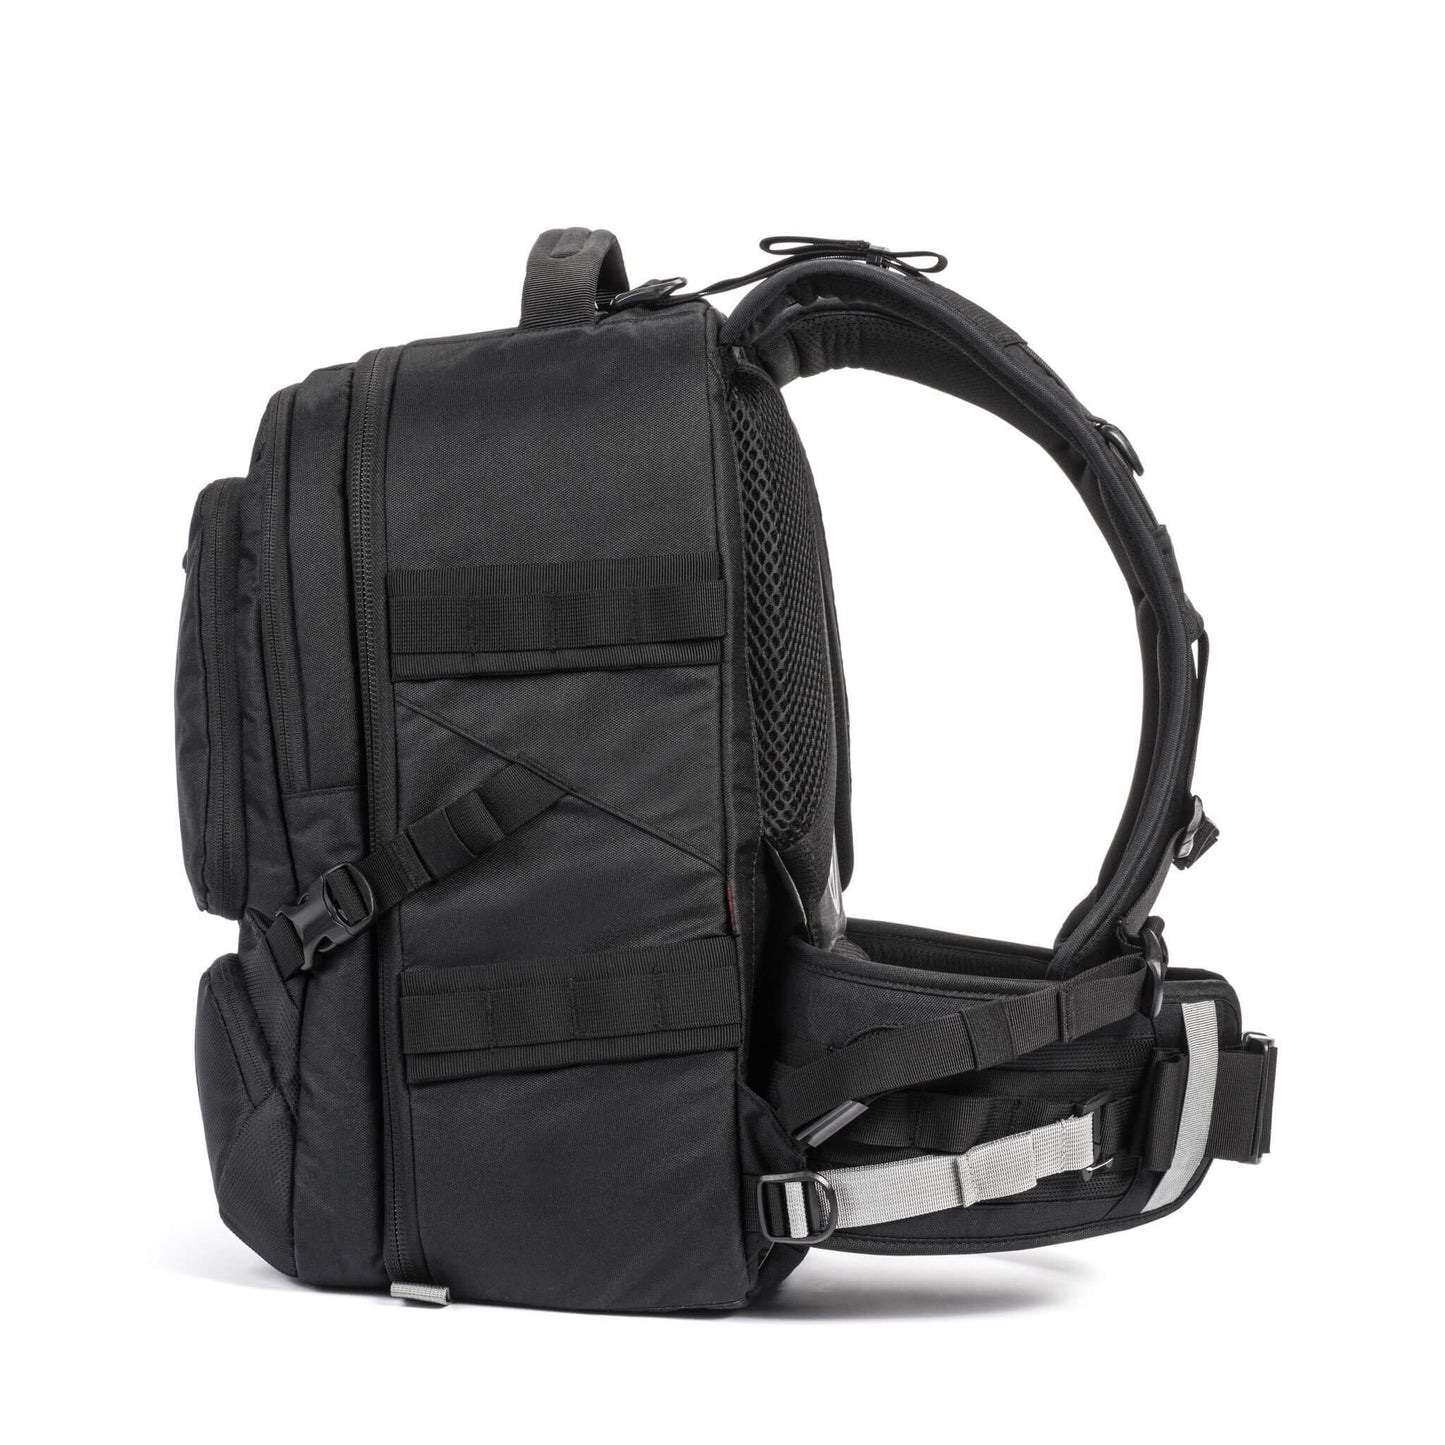 Tamrac Anvil 23 Camera Backpack with Belt (T0240-1919)